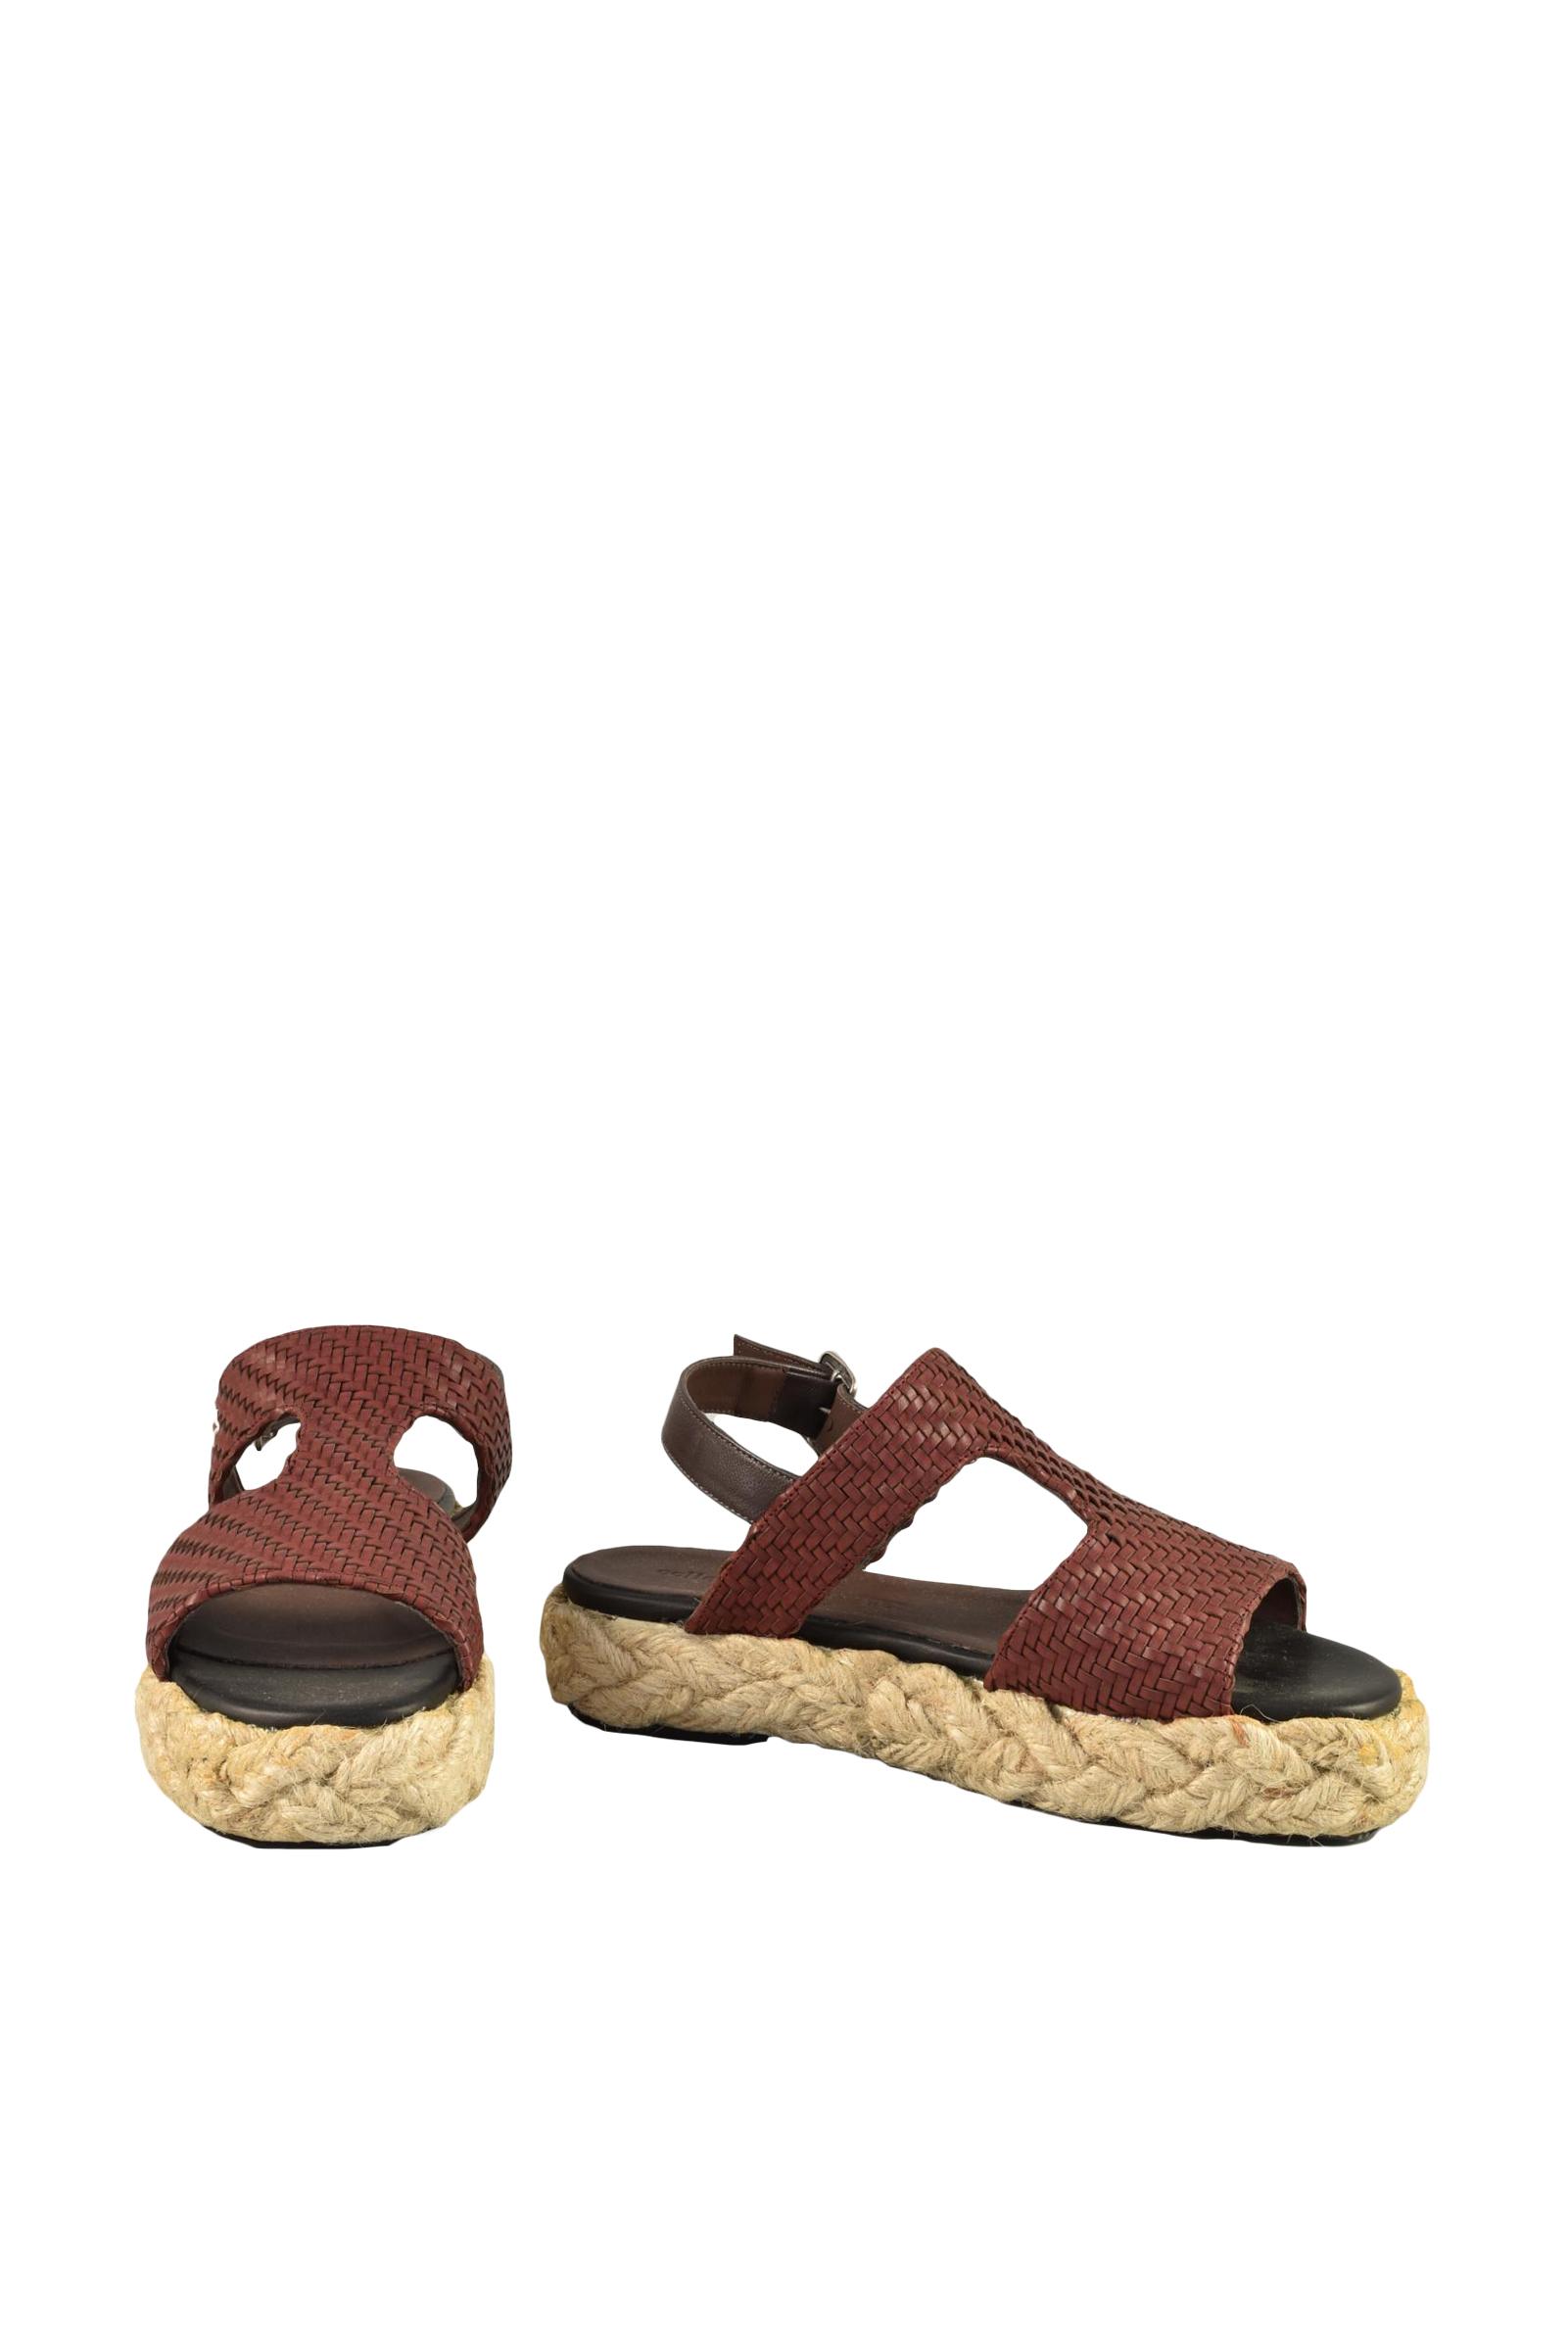 Collection Privee Women's Brown Sandals